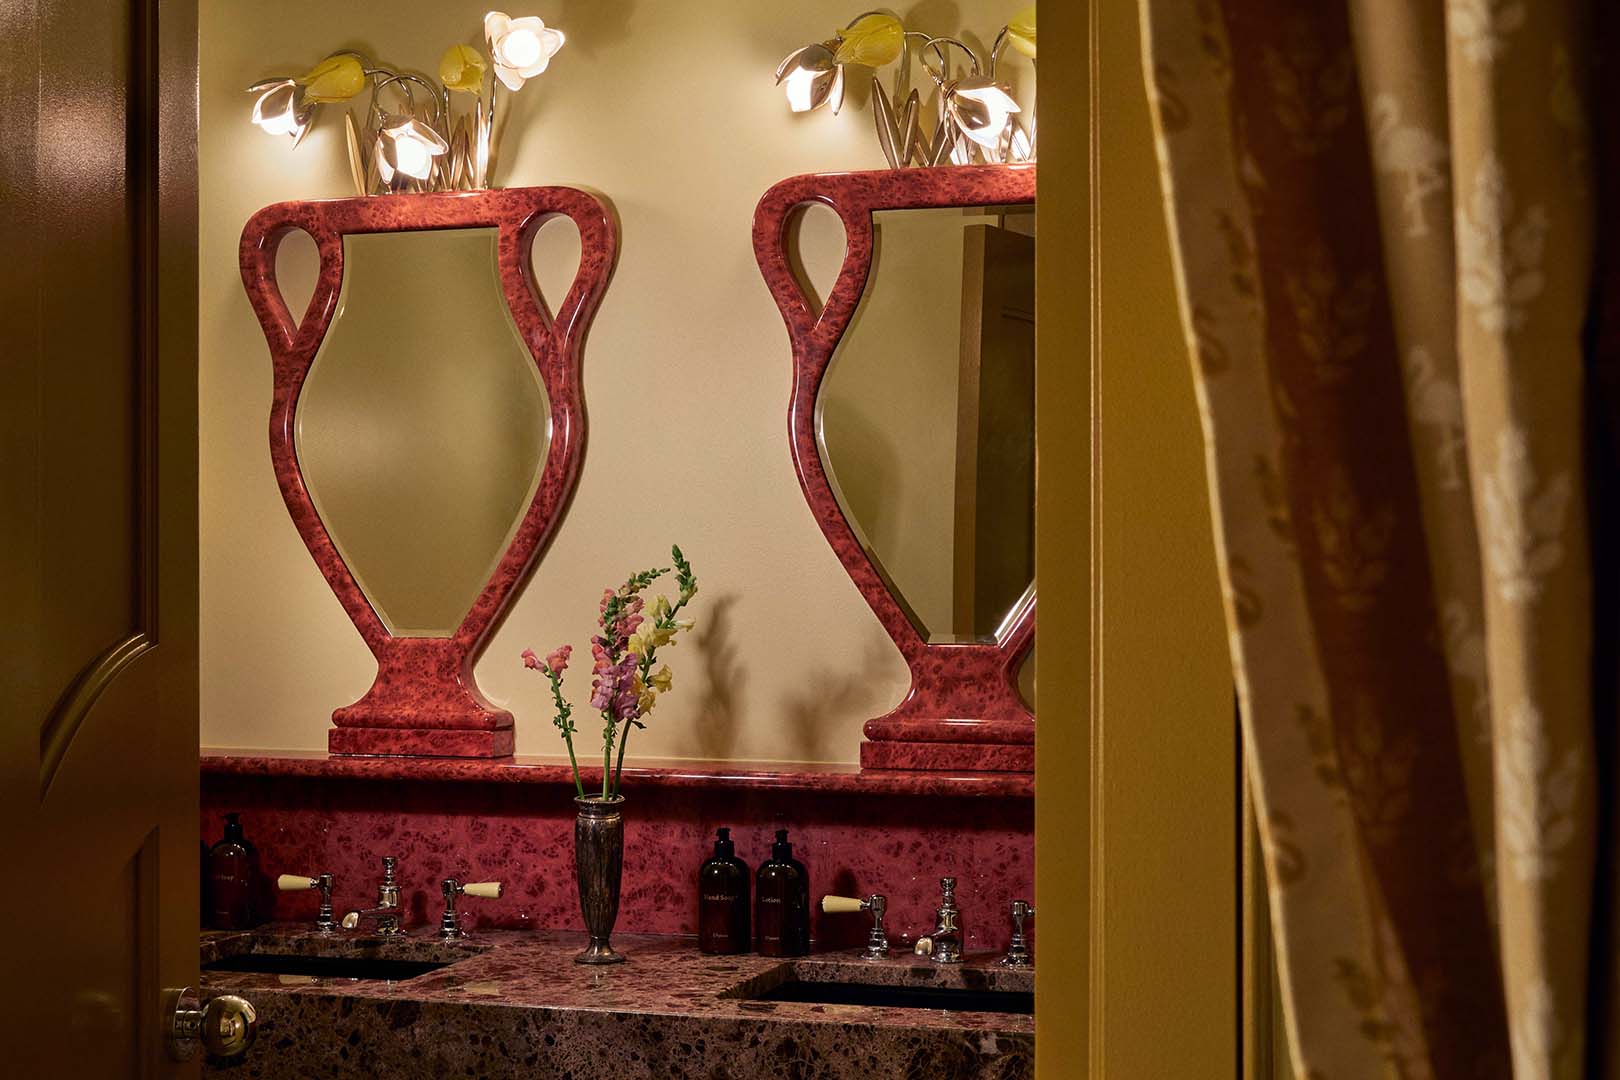 mirrors shaped like vases